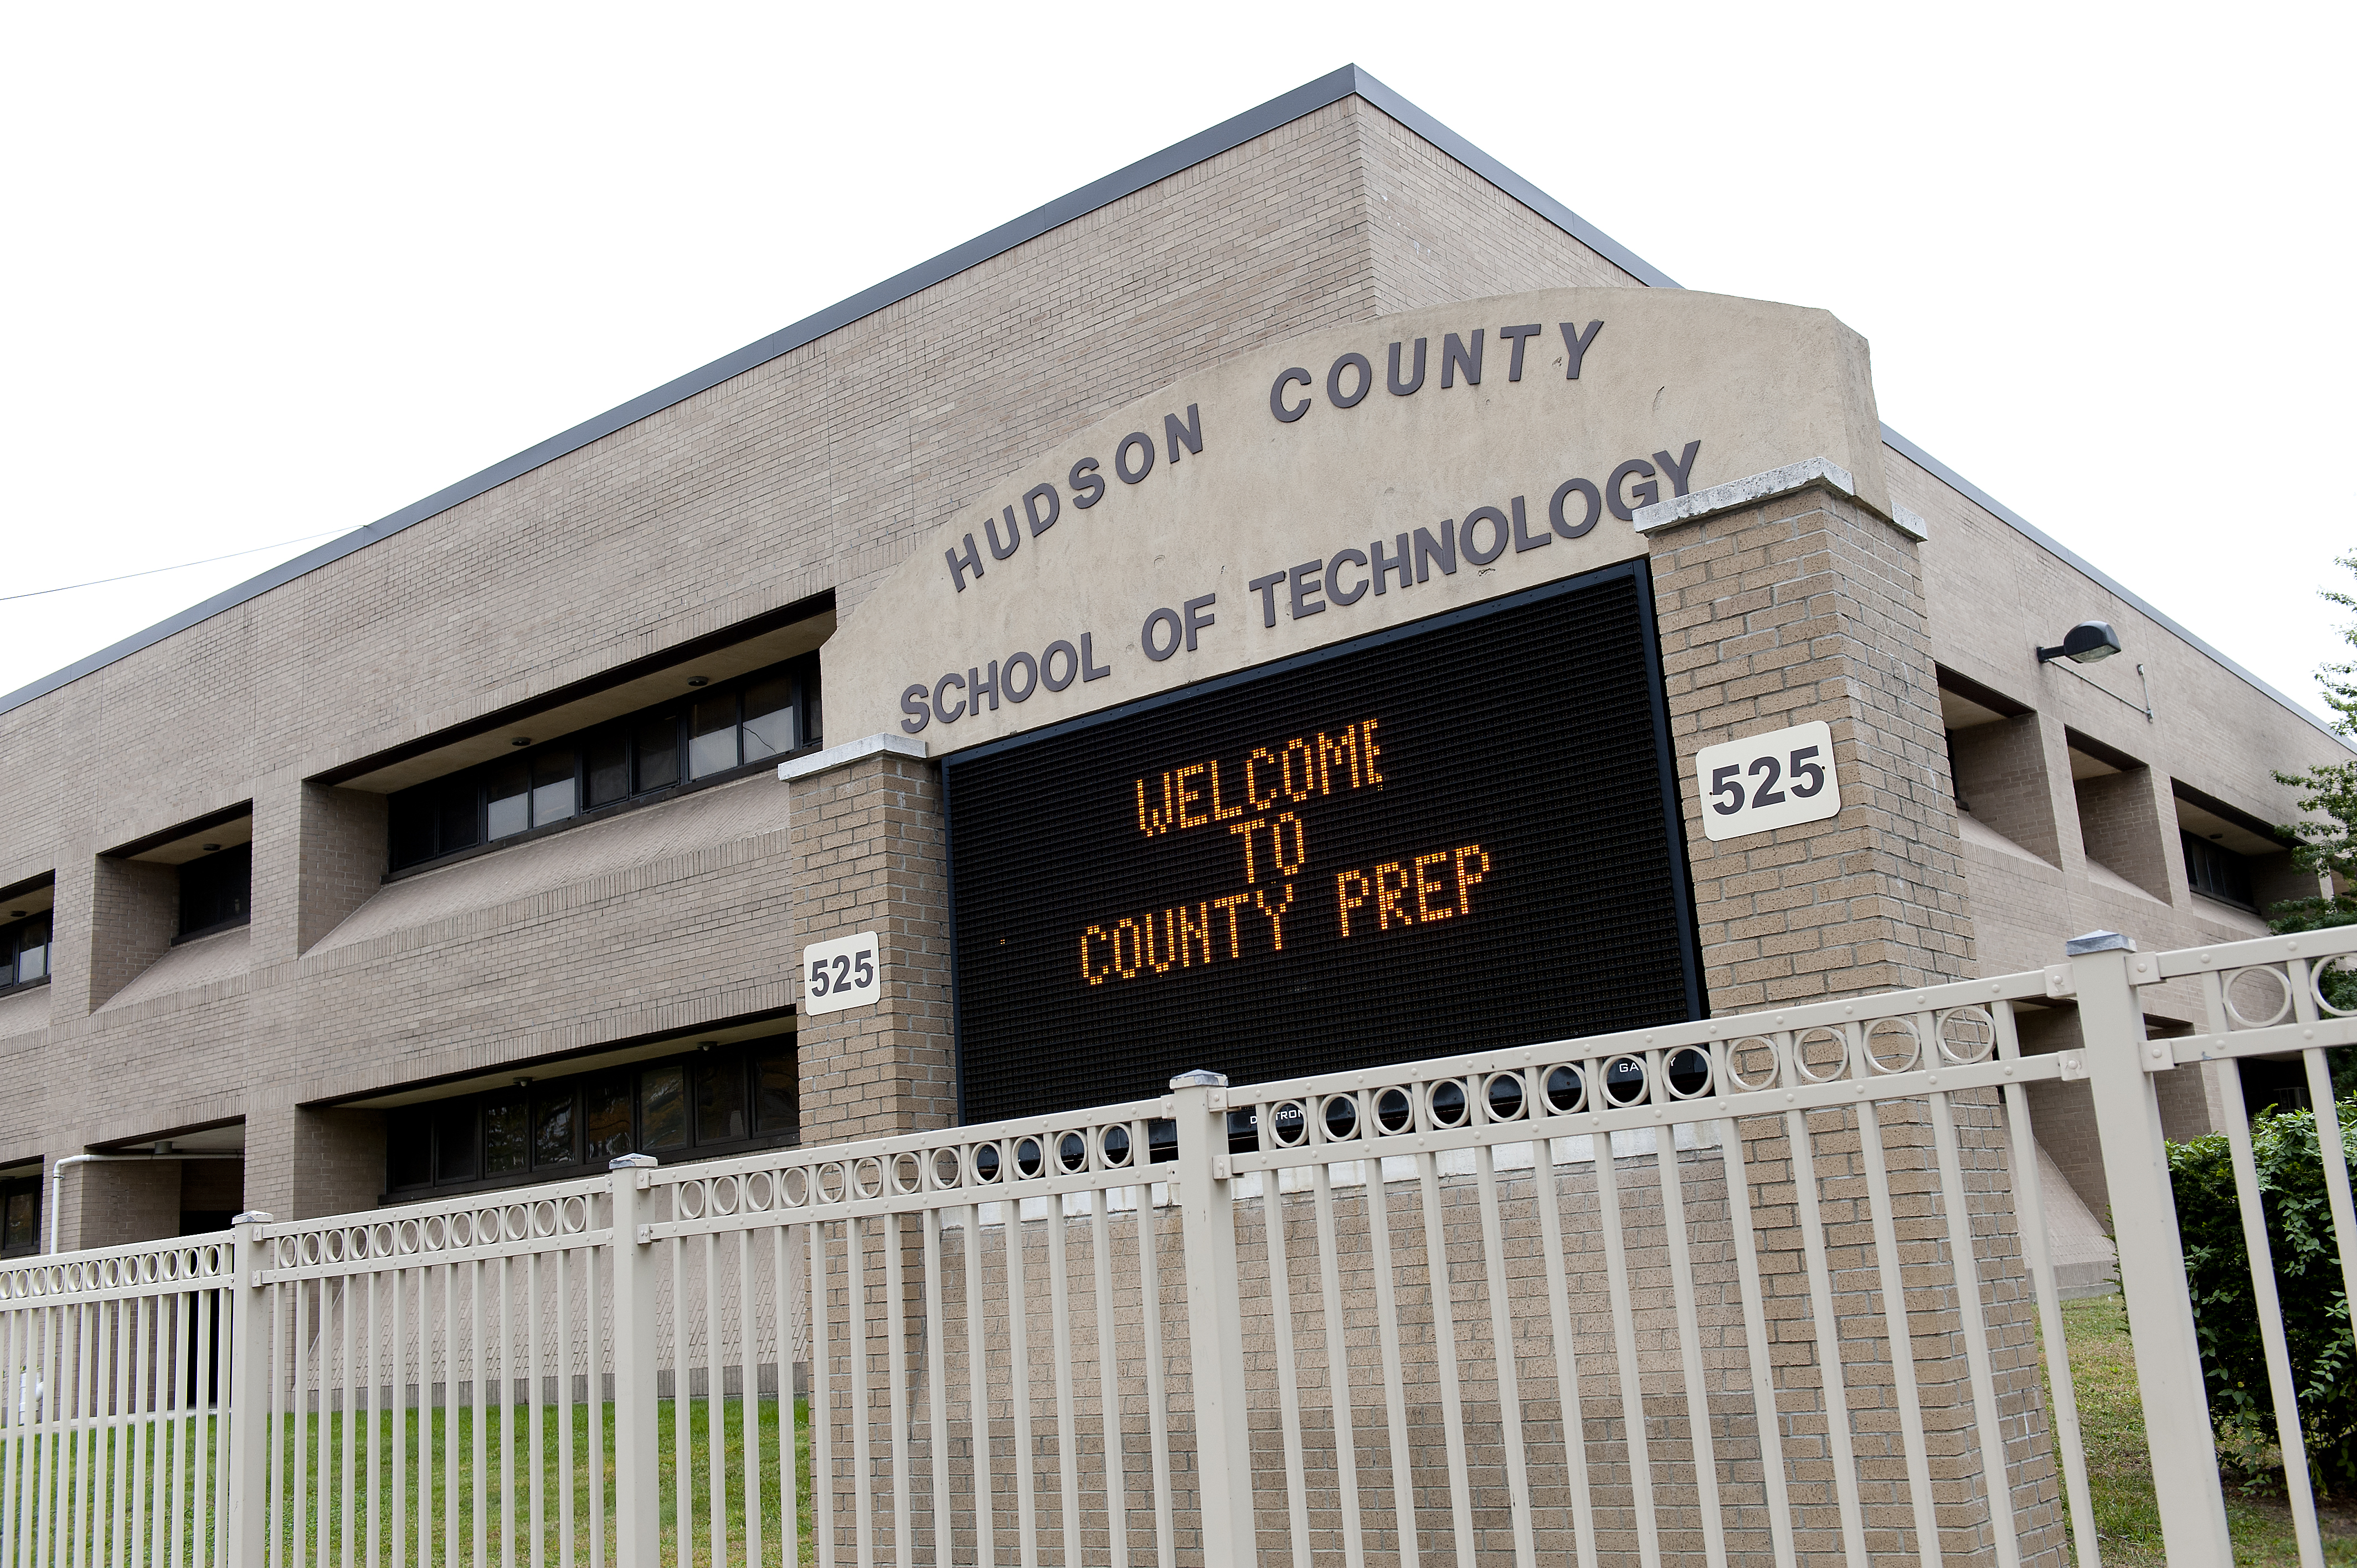 High Tech High School – Hudson County Schools of Technology